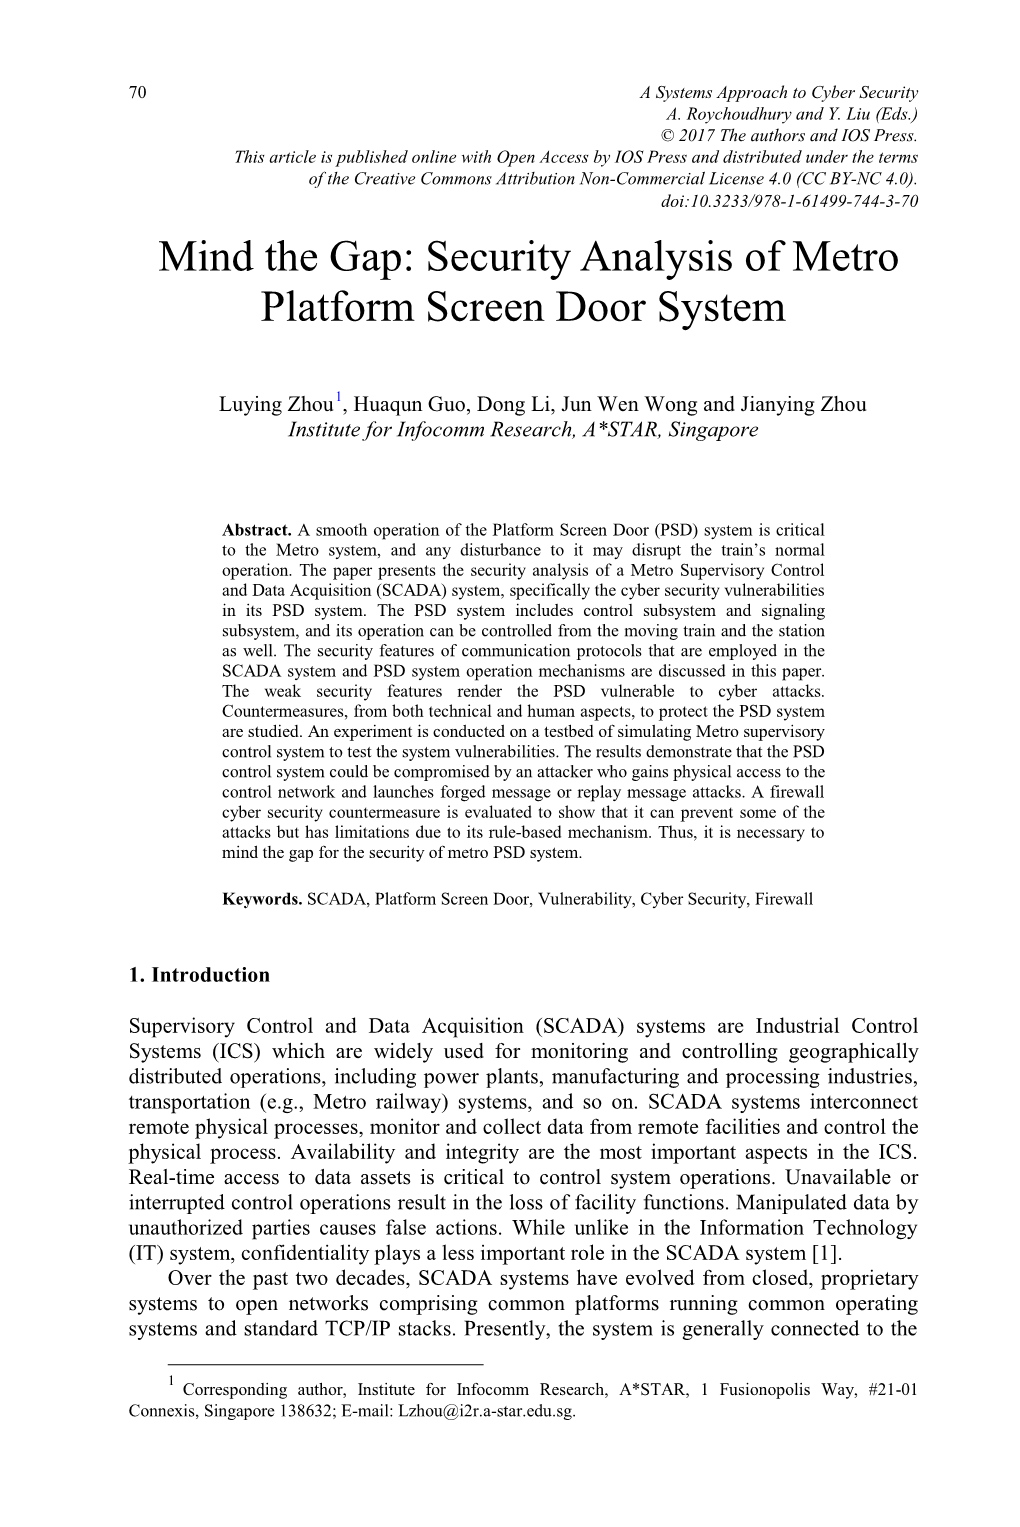 Mind the Gap: Security Analysis of Metro Platform Screen Door System